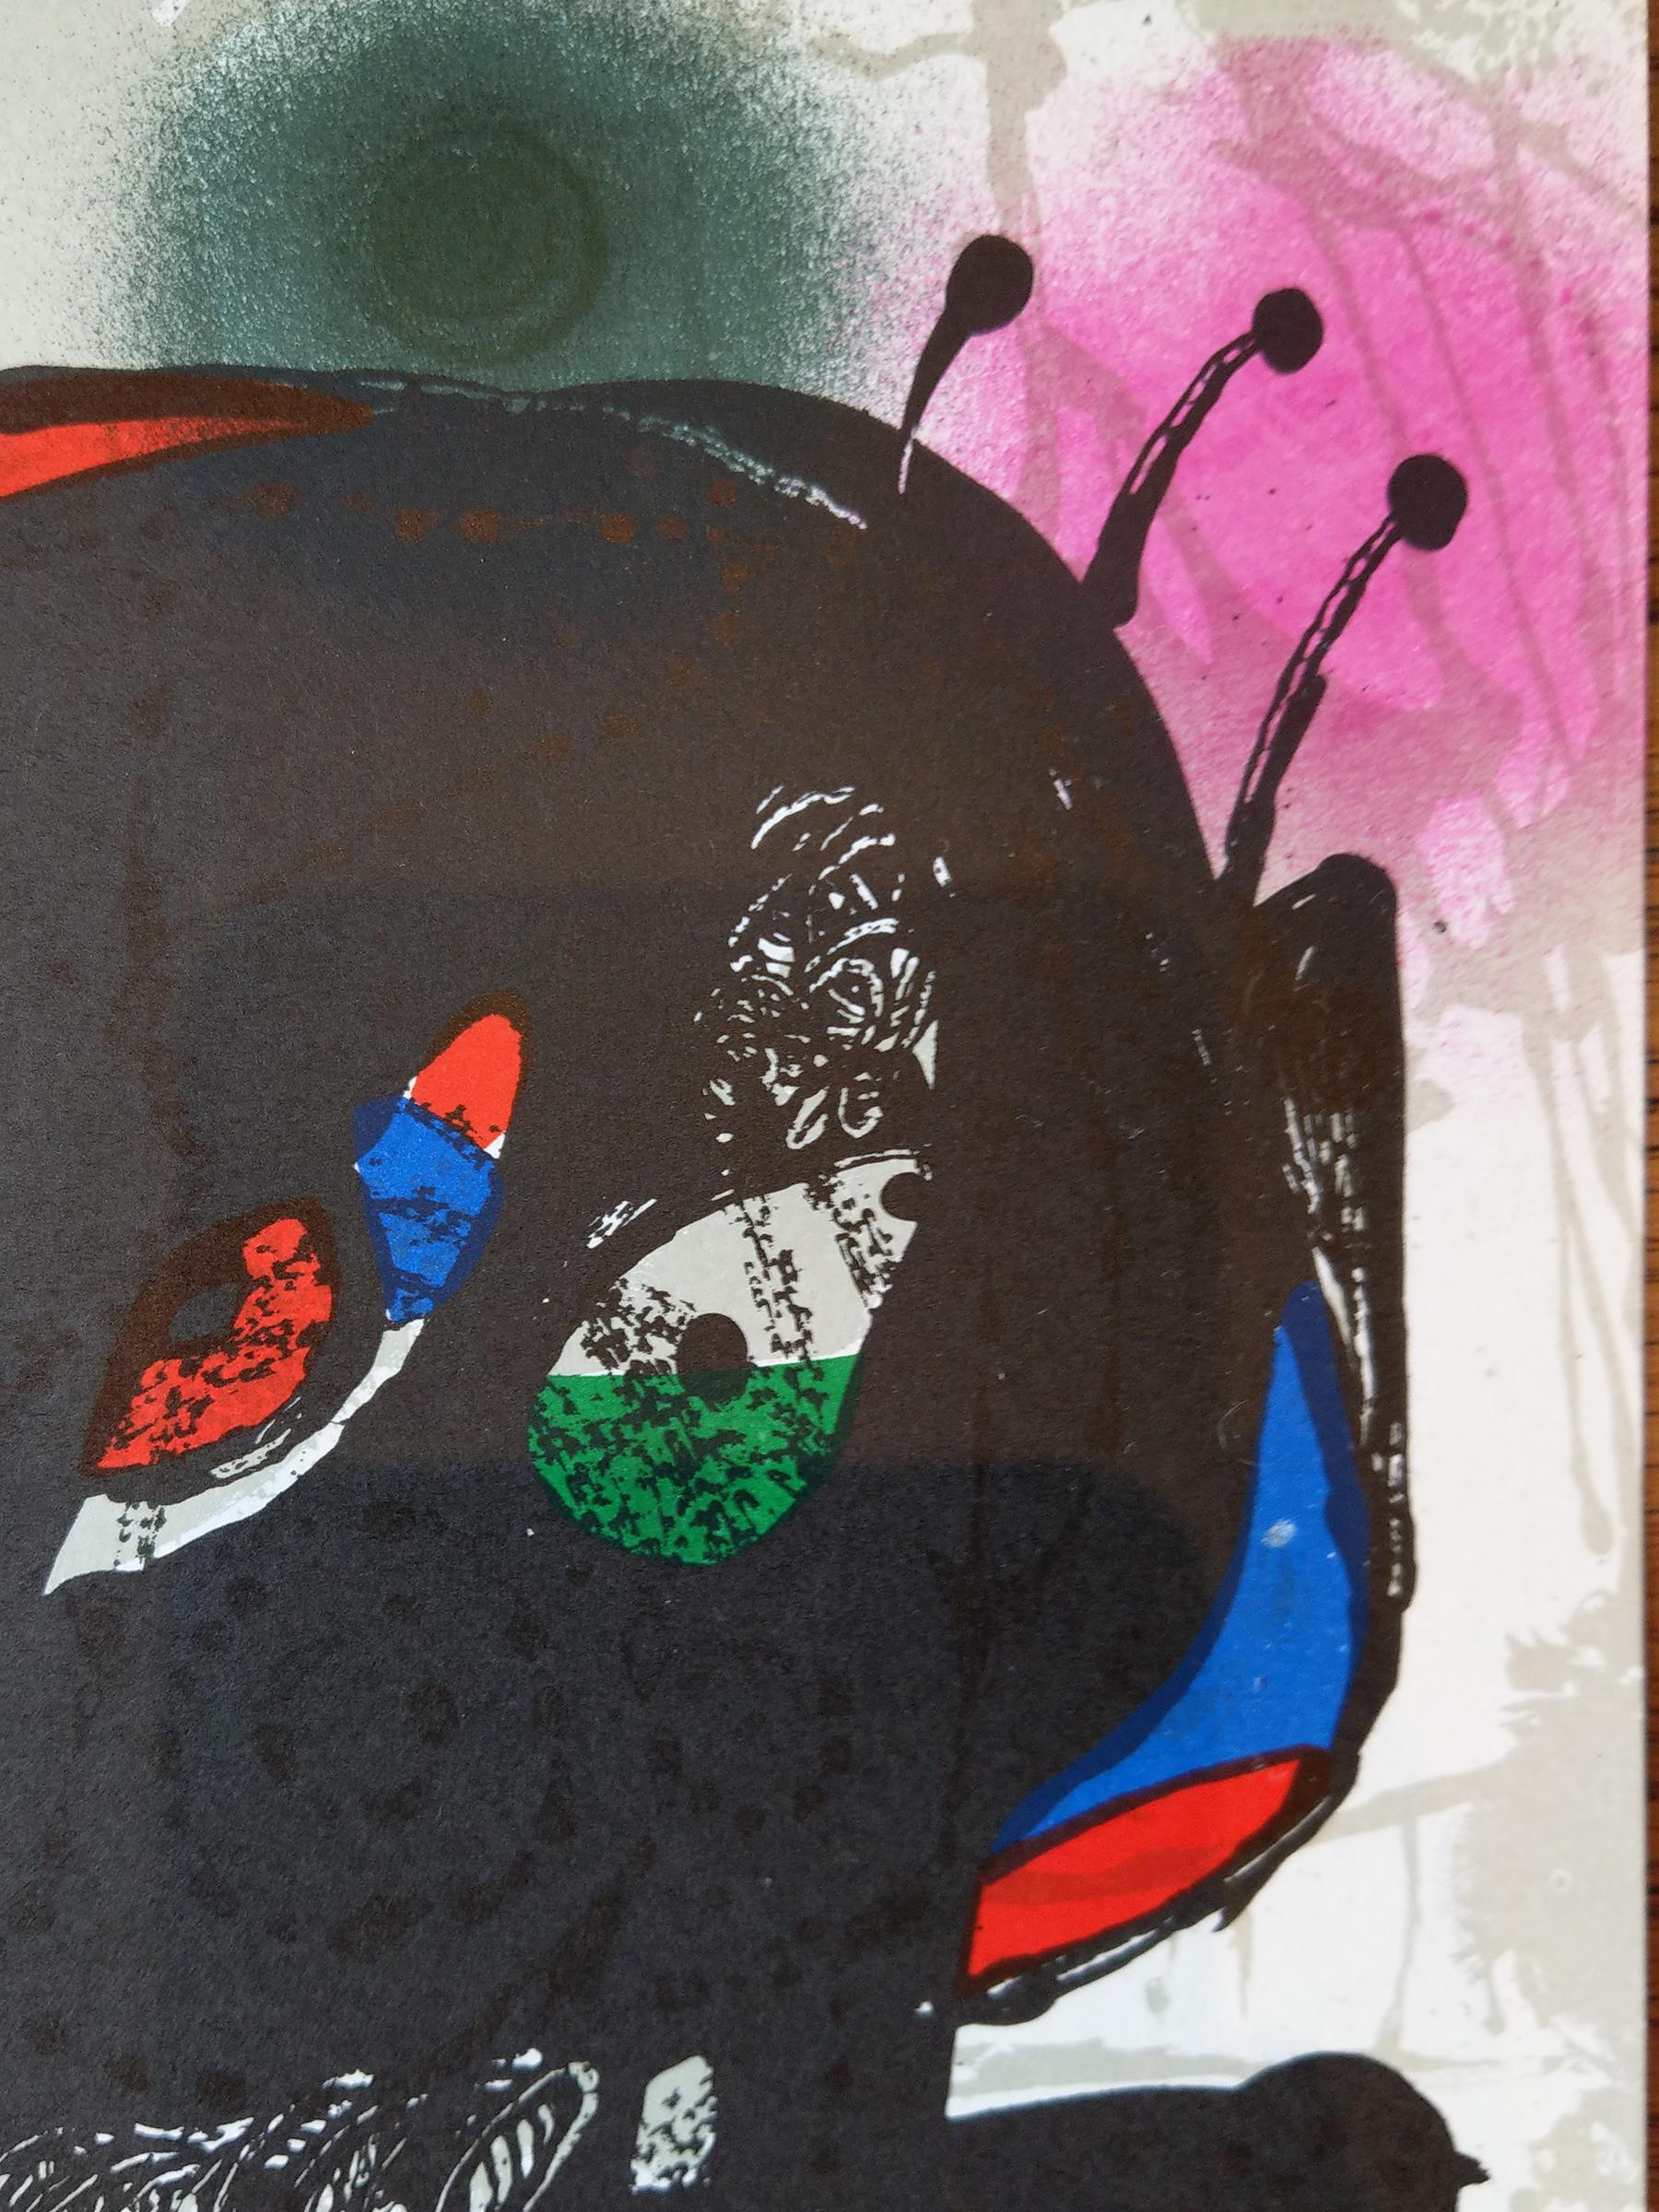 Lithograph III - Volume III - Print by Joan Miró